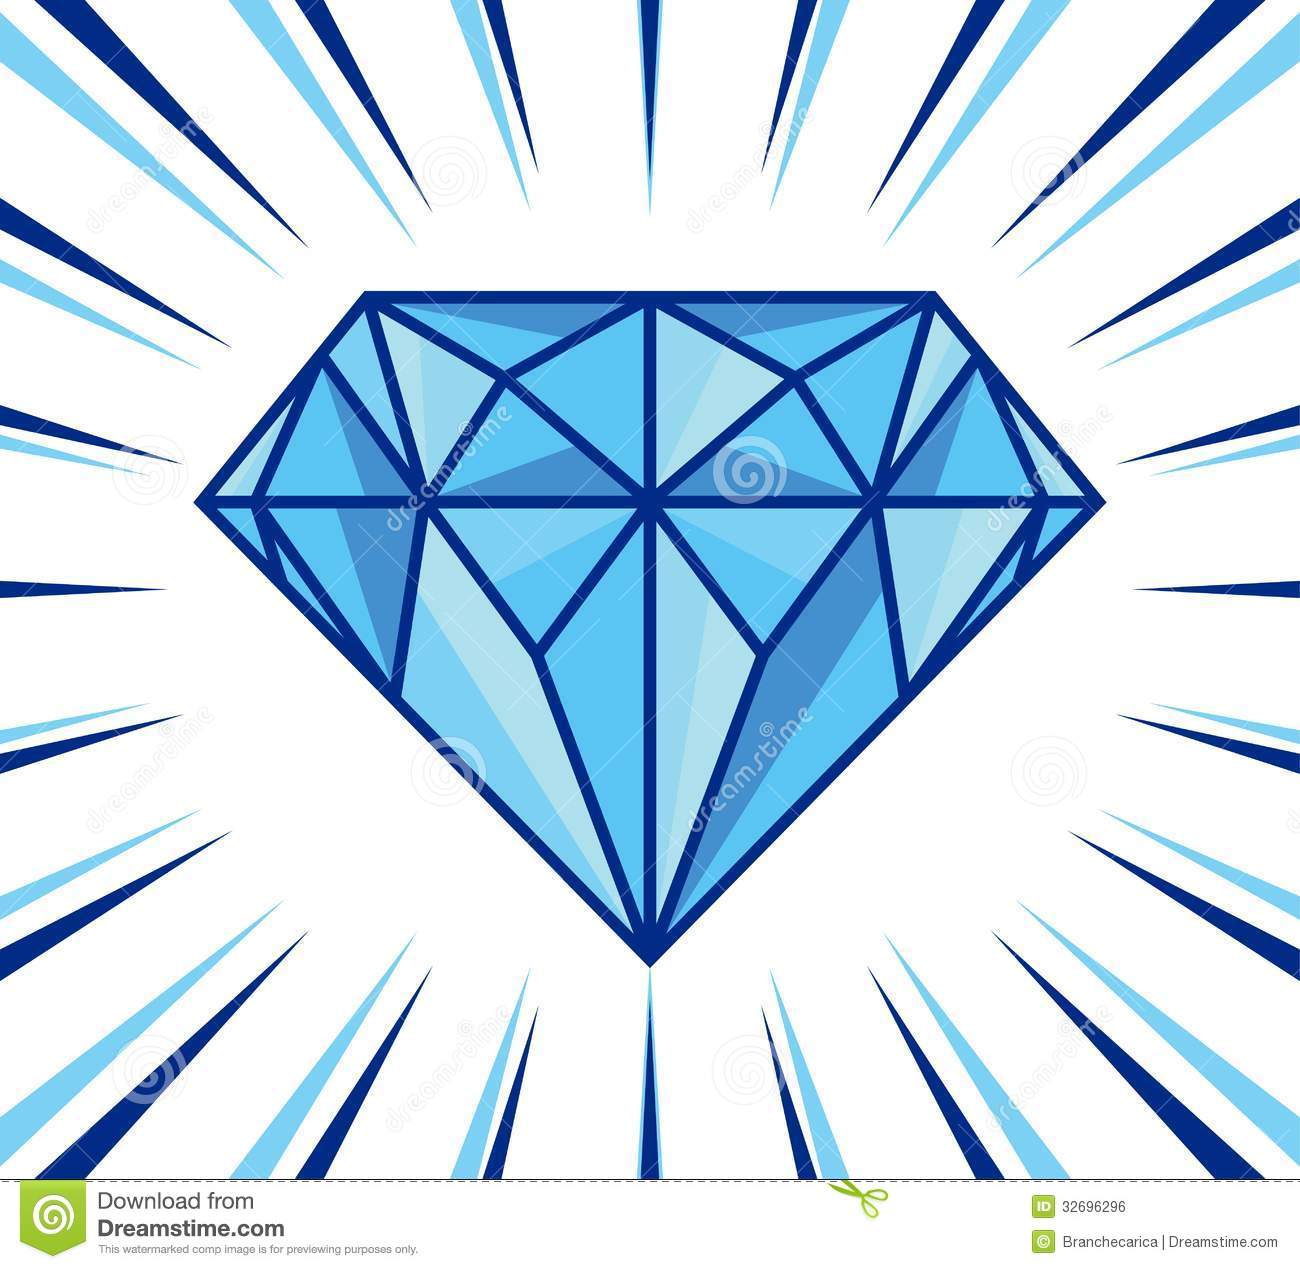 Diamond Shine Royalty Free Stock Image   Image  32696296